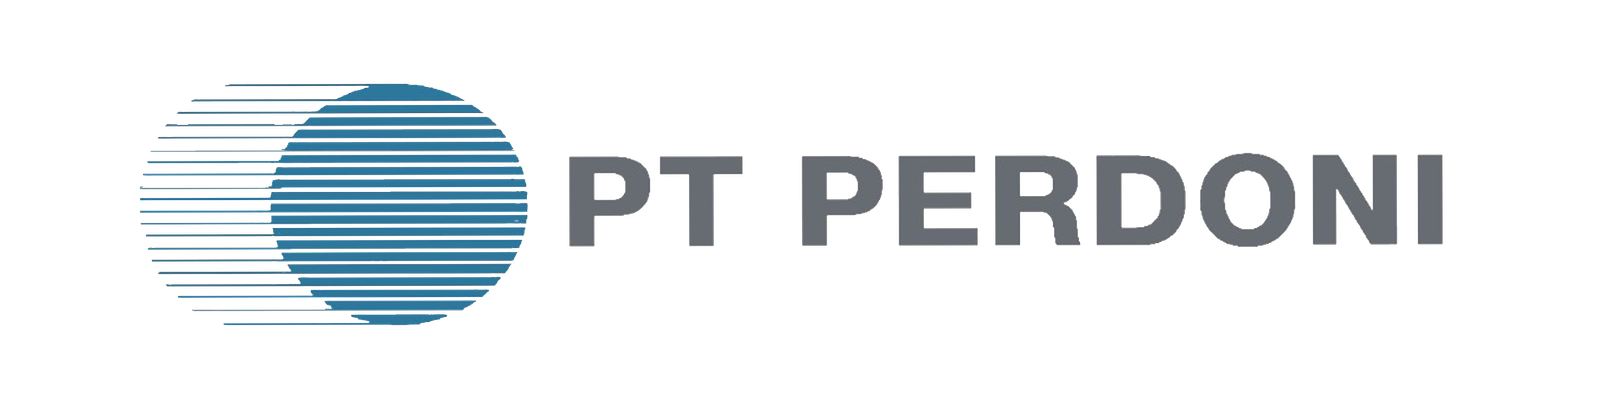 PT Perdoni Chemical Logo